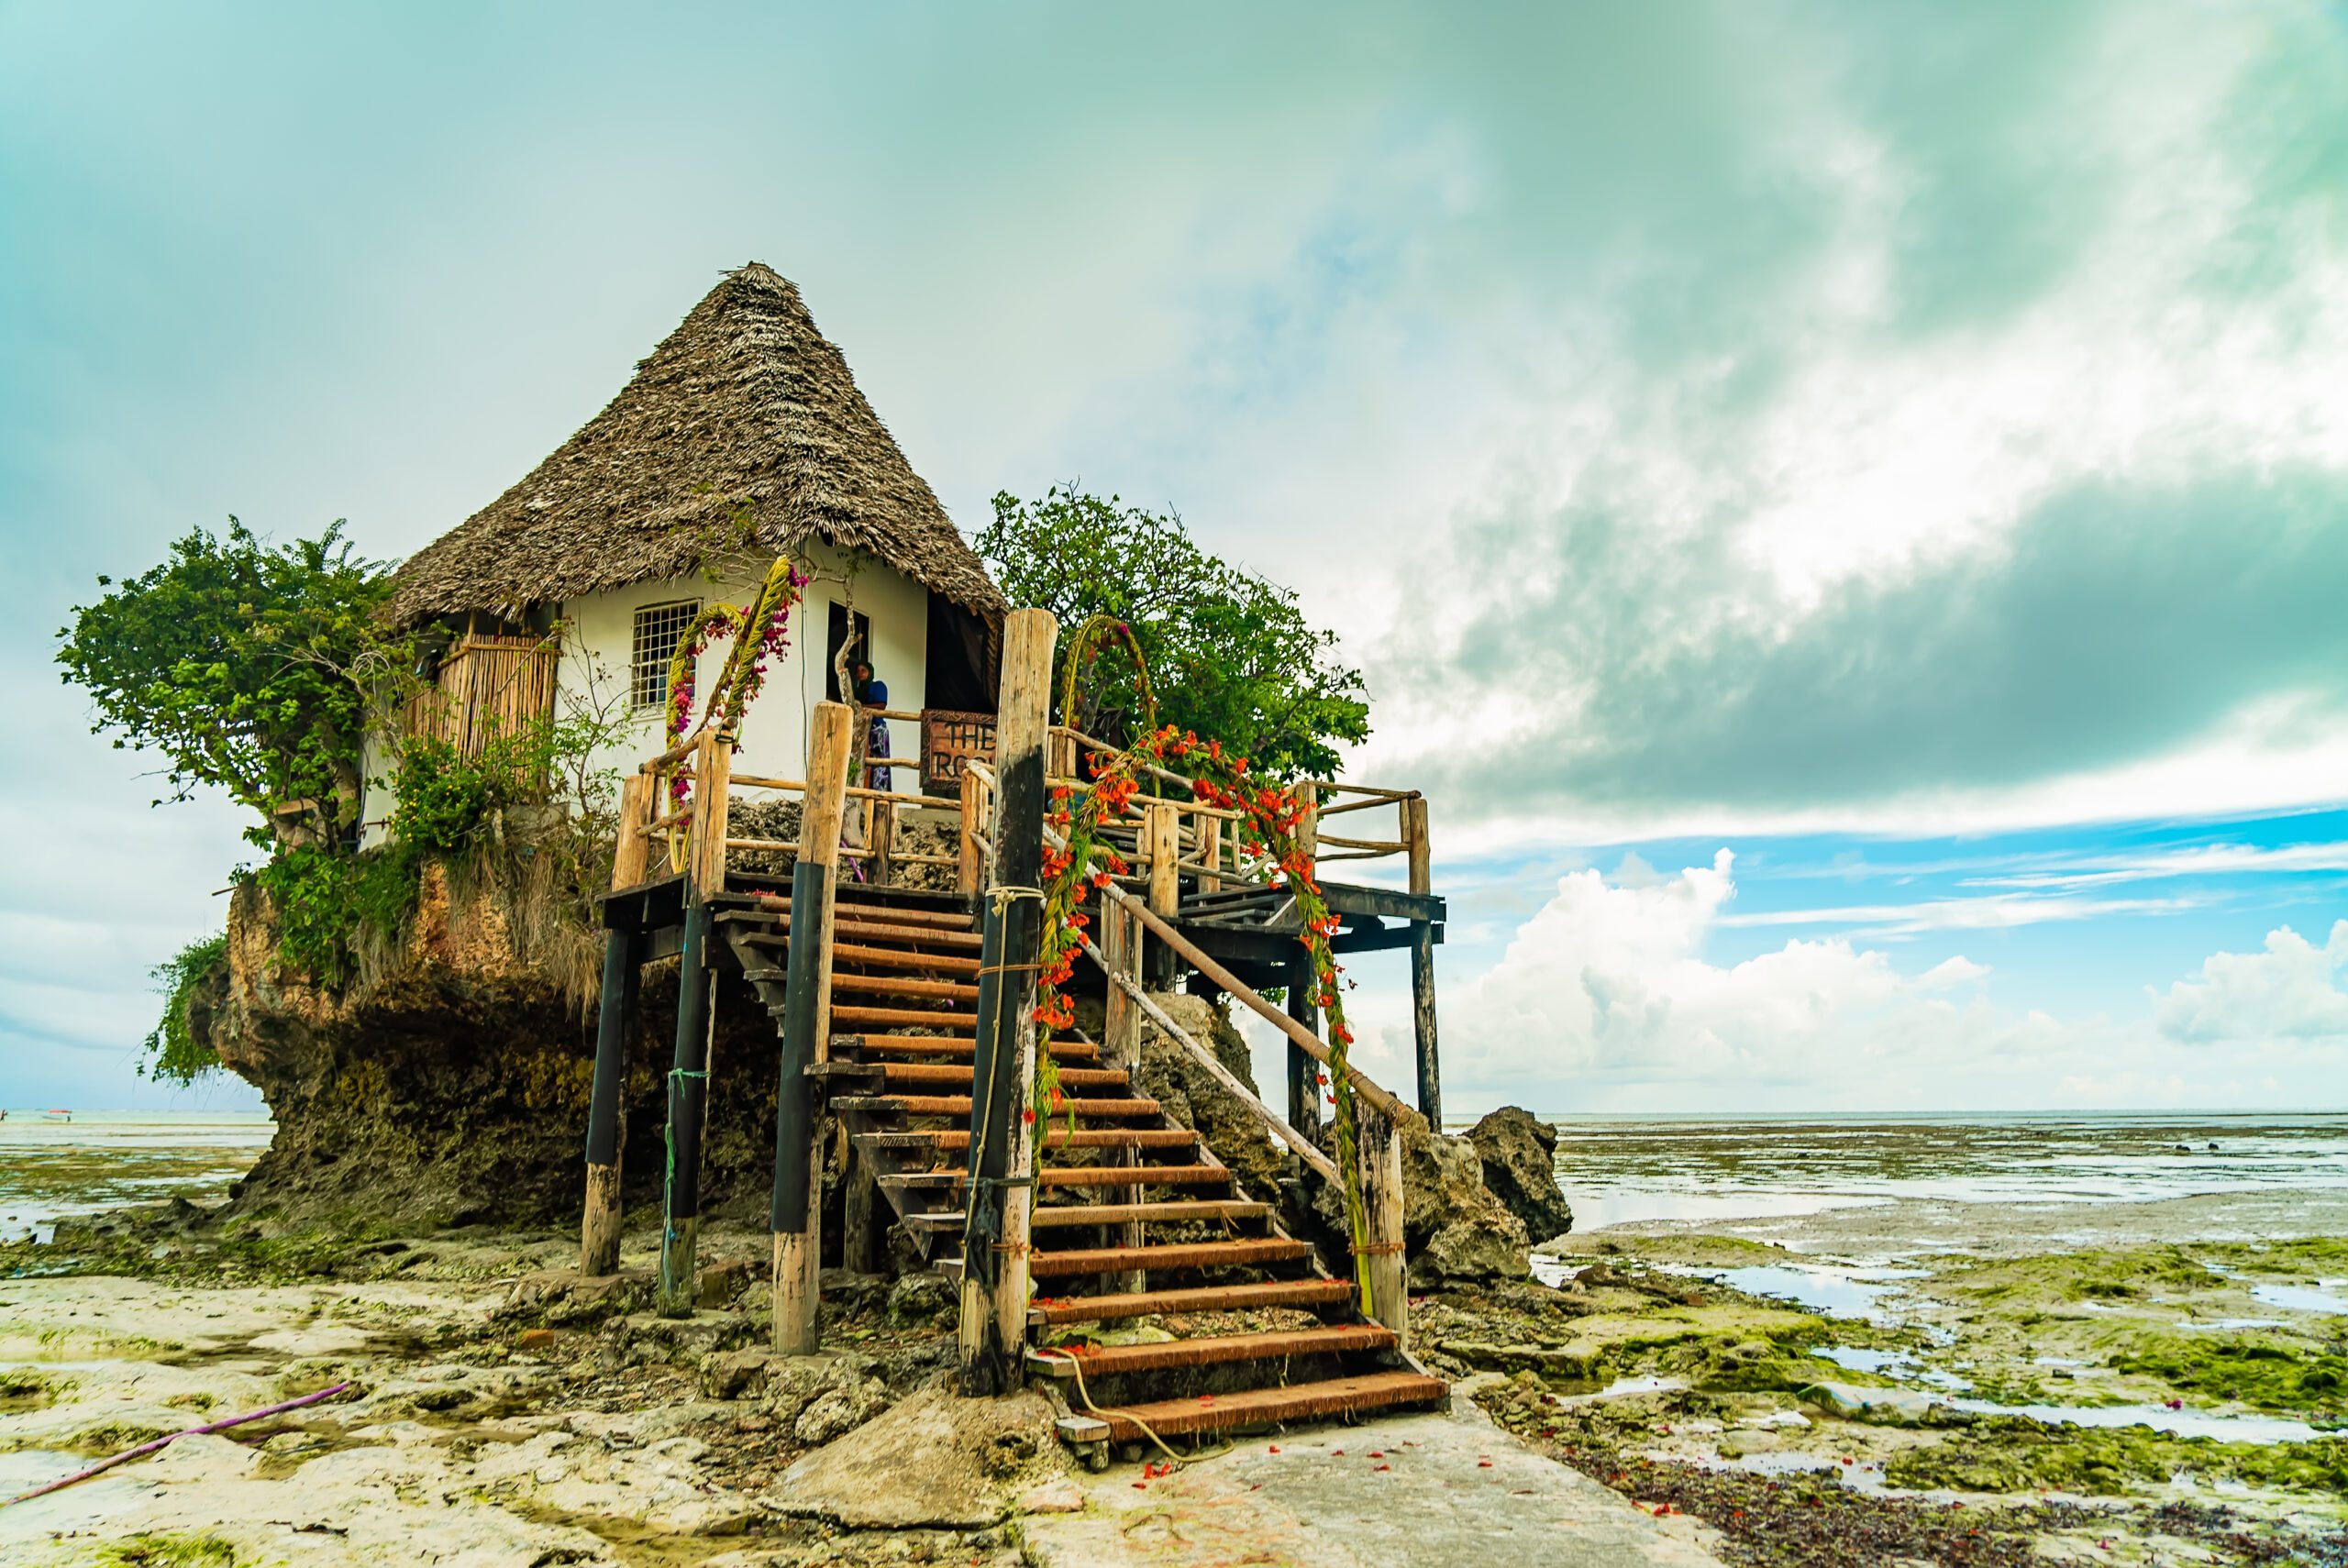 The Rocks restaurant on the beach during low tide. Pingwe, Zanzibar, Tanzania